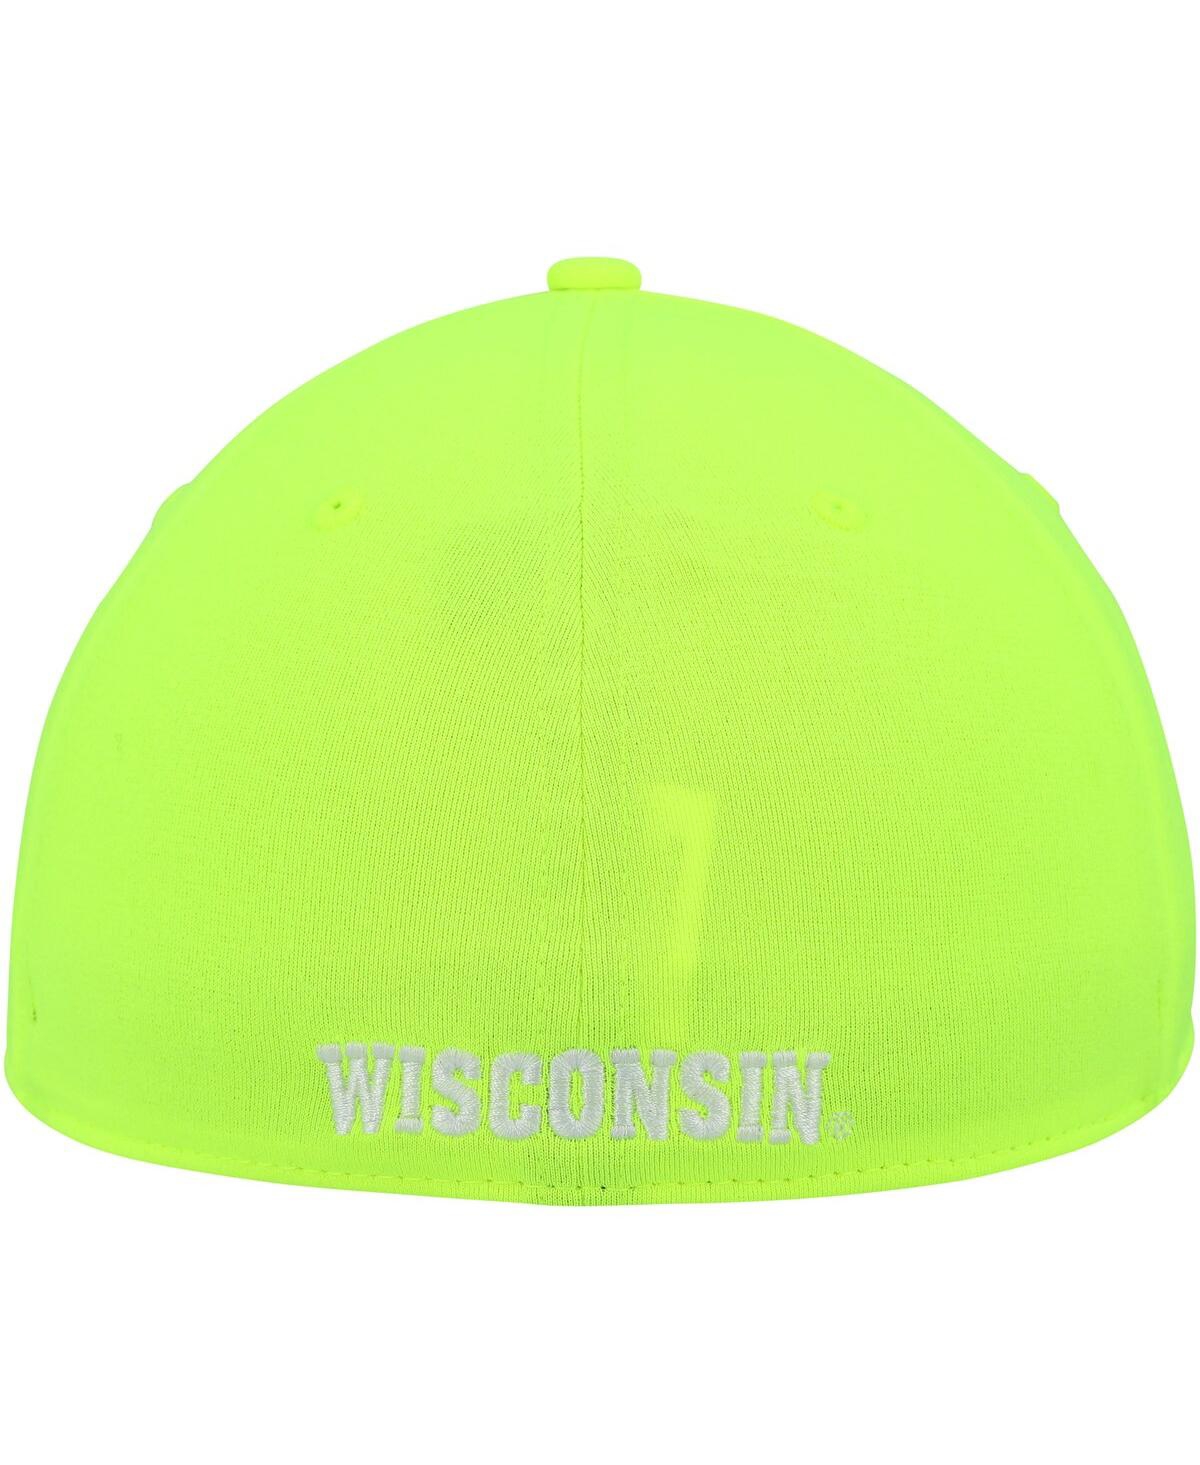 Shop Under Armour Men's  Neon Green Wisconsin Badgers Signal Call Performance Flex Hat